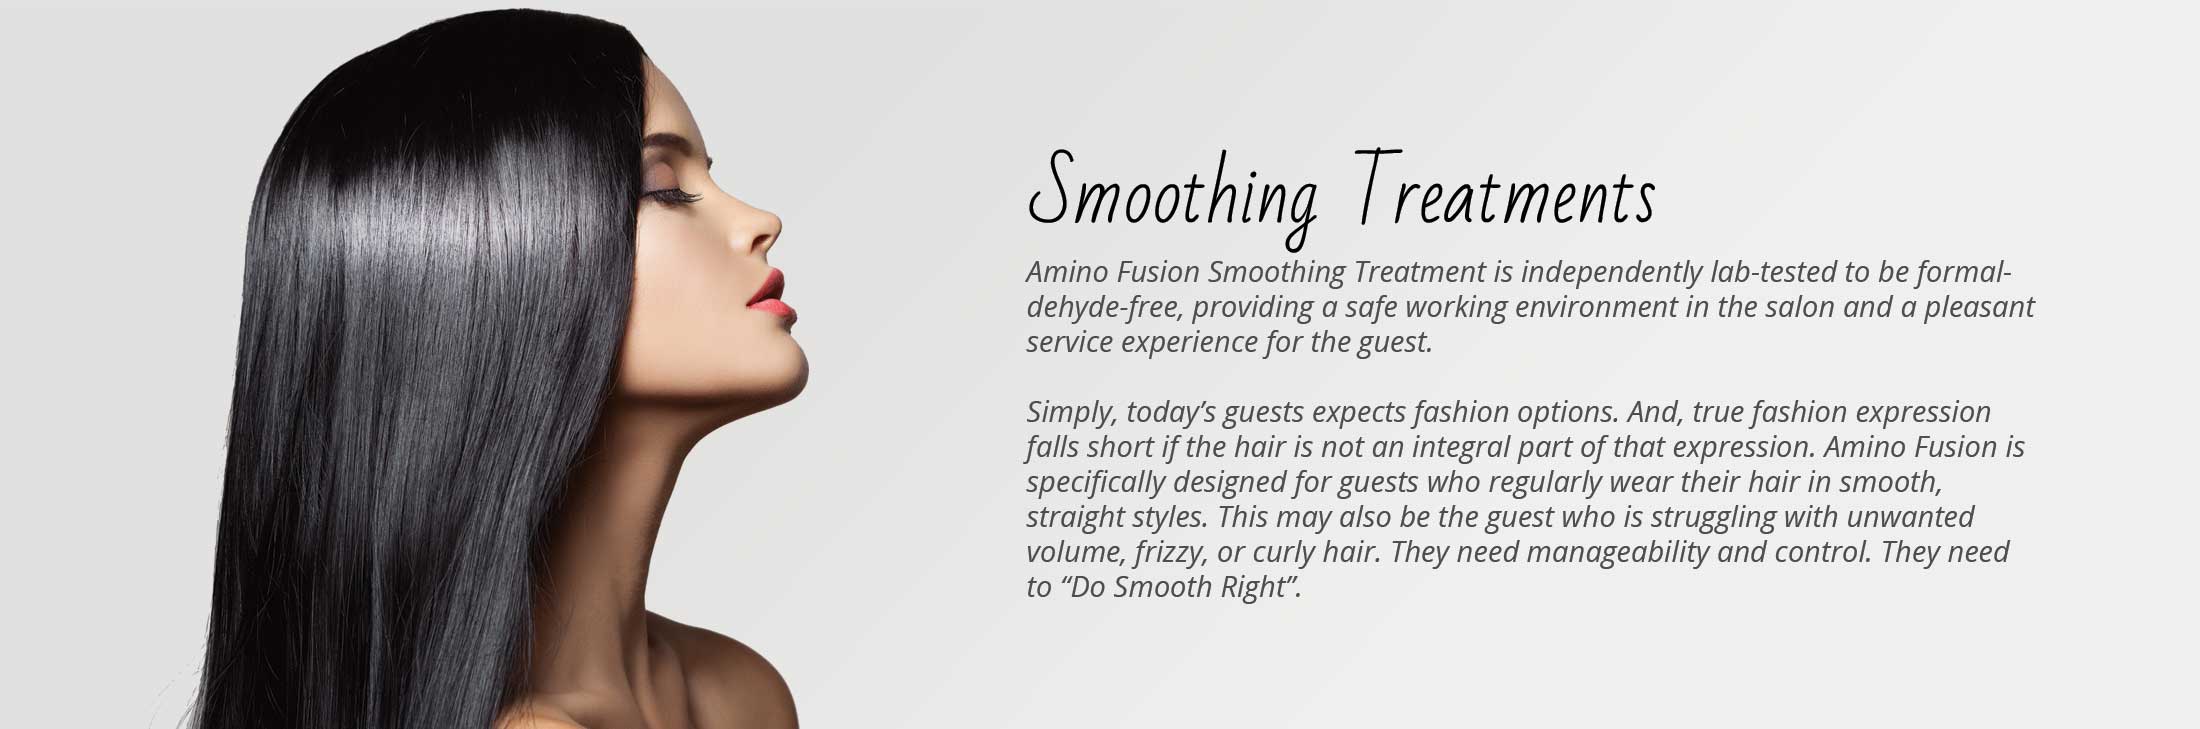 smoothing treatments